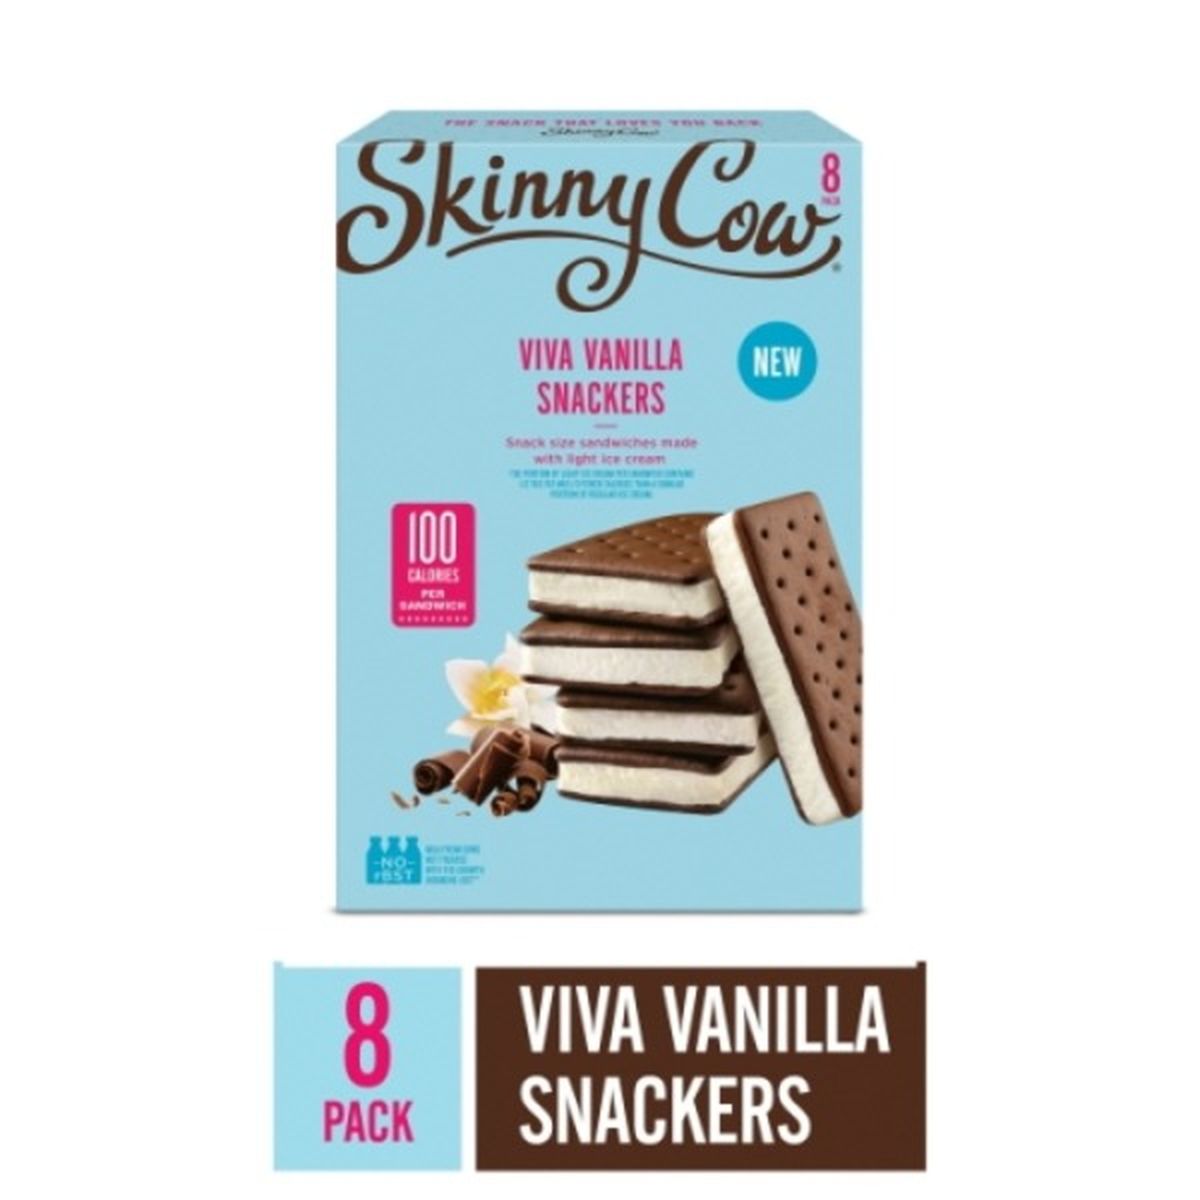 Calories in Skinny Cow Ice Cream Sandwiches, Snackers, Viva Vanilla, 8 Pack